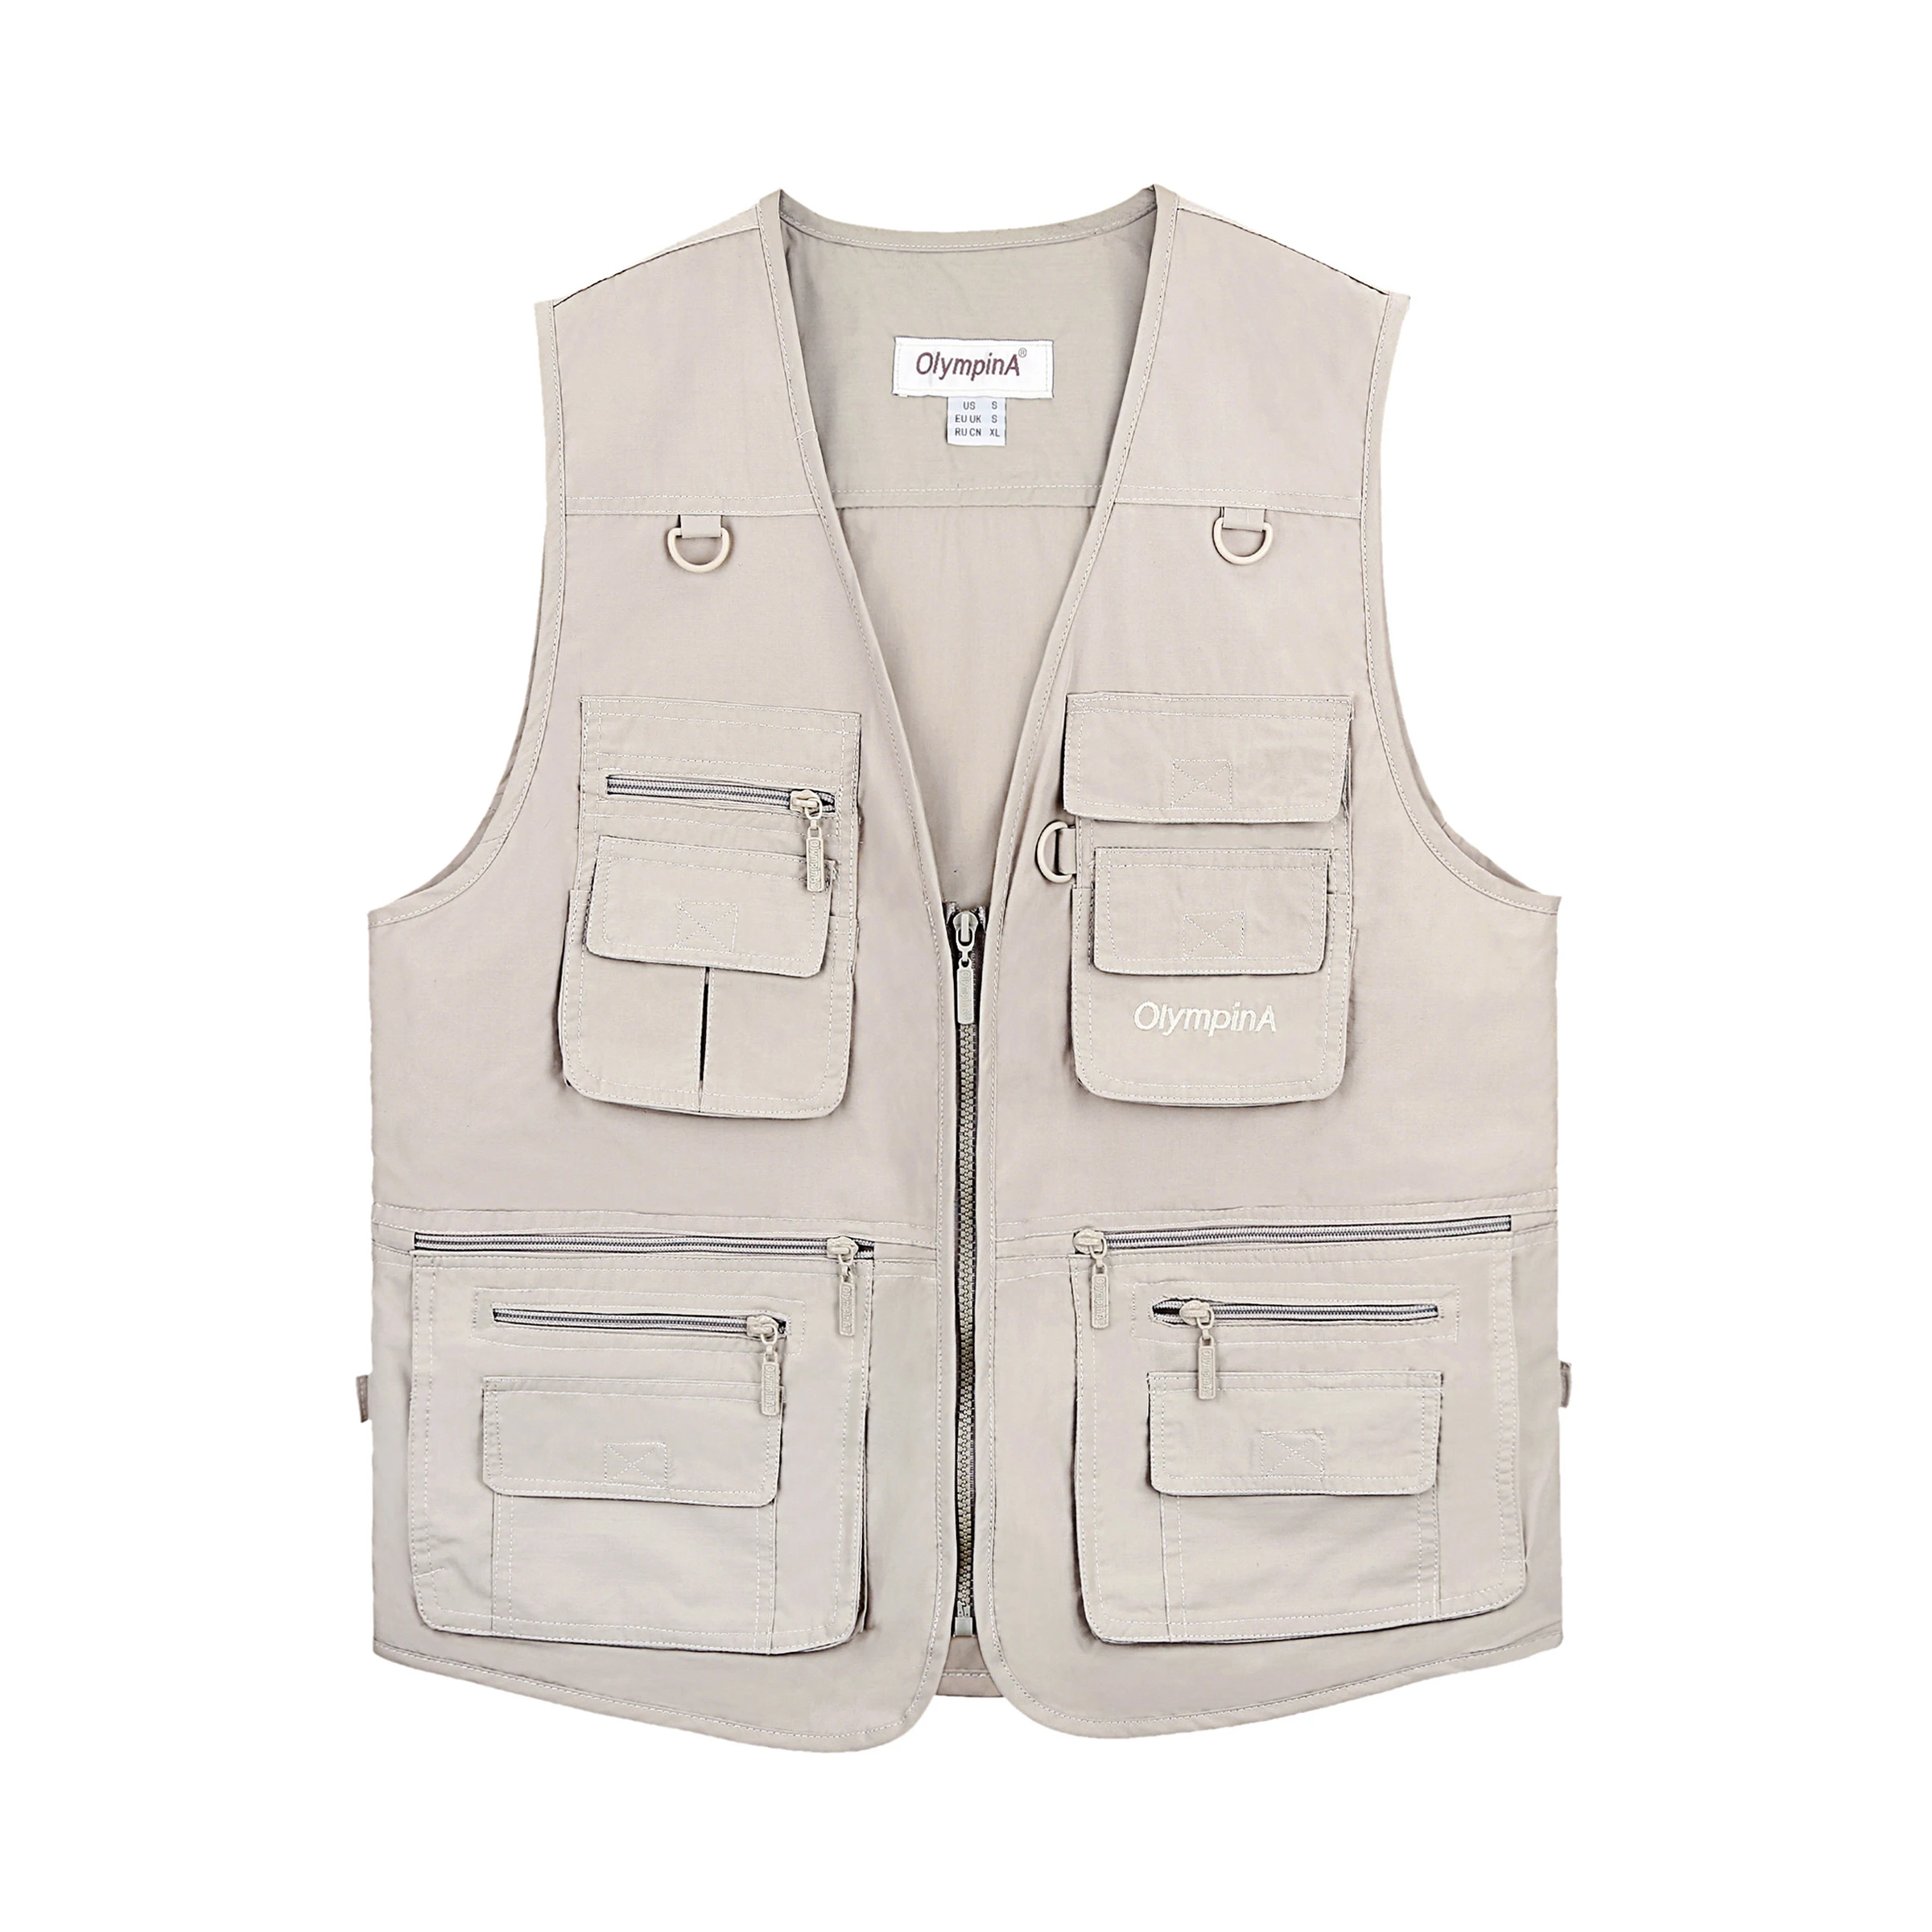 Spanye Mens Fishing Vest Alive Outerwear Multi-Pocket Vests Casual Work Sleeveless Jacket 